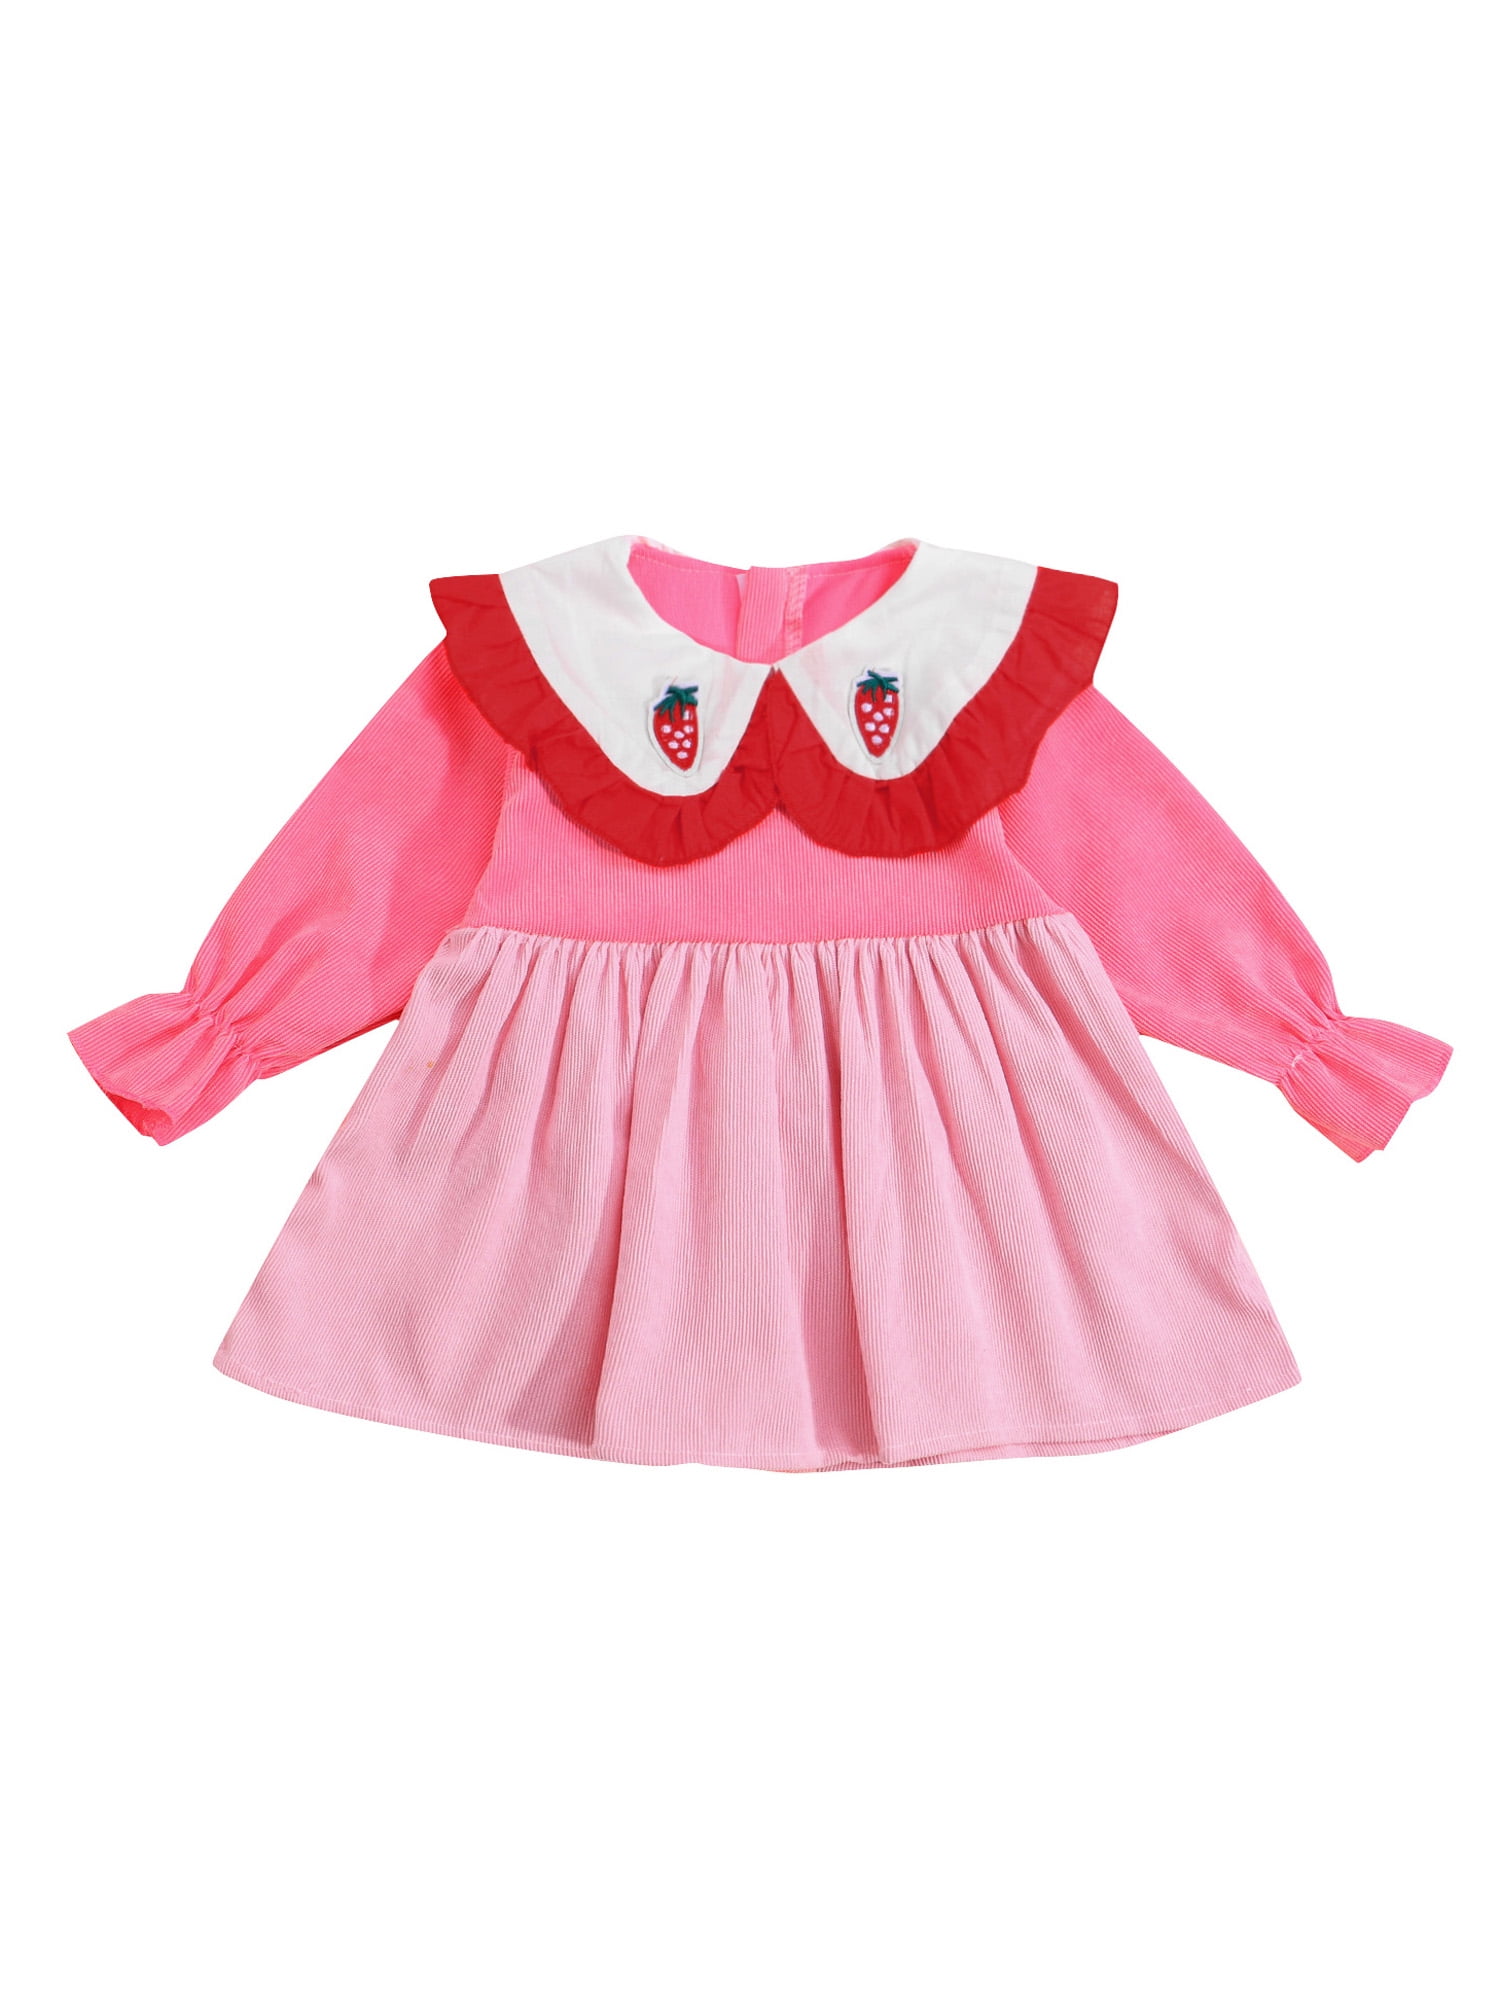 Huakaishijie Toddler Baby Kids Girls Long Sleeve Dresses A Line Tulle Dress Walmart Com